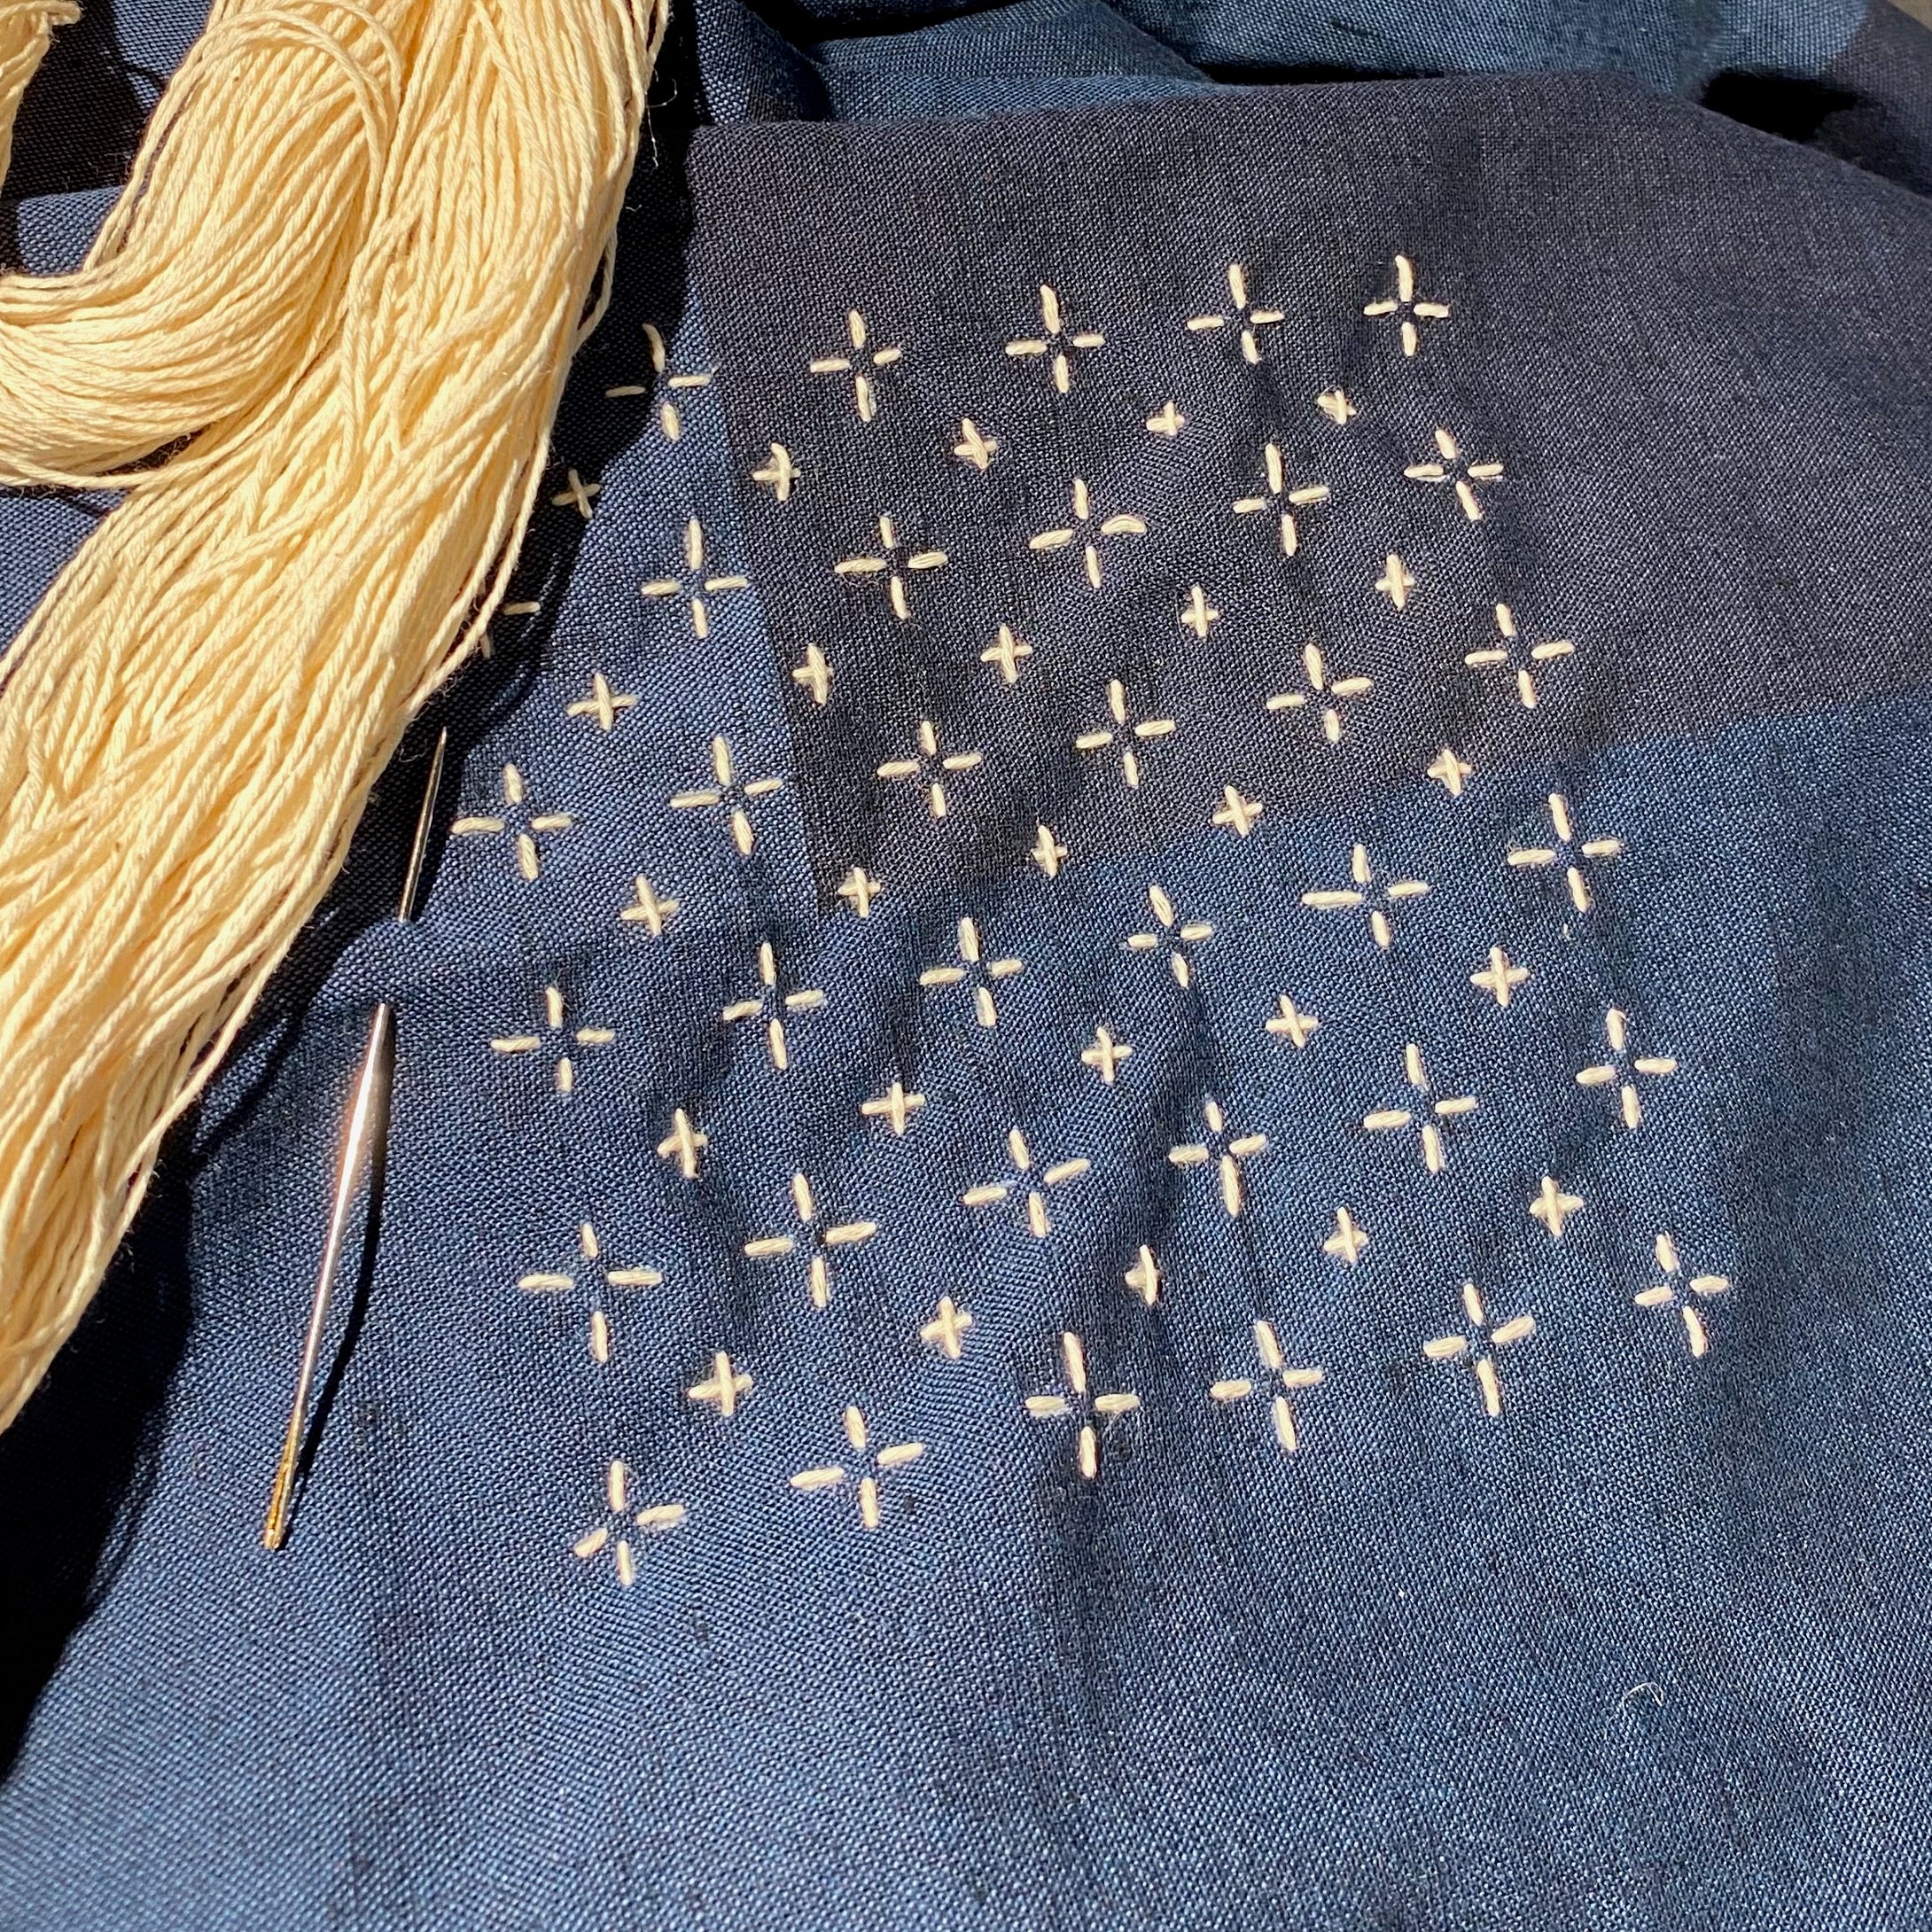 Kururi-sashiko sashiko and weaving stencil design step 1 stitched